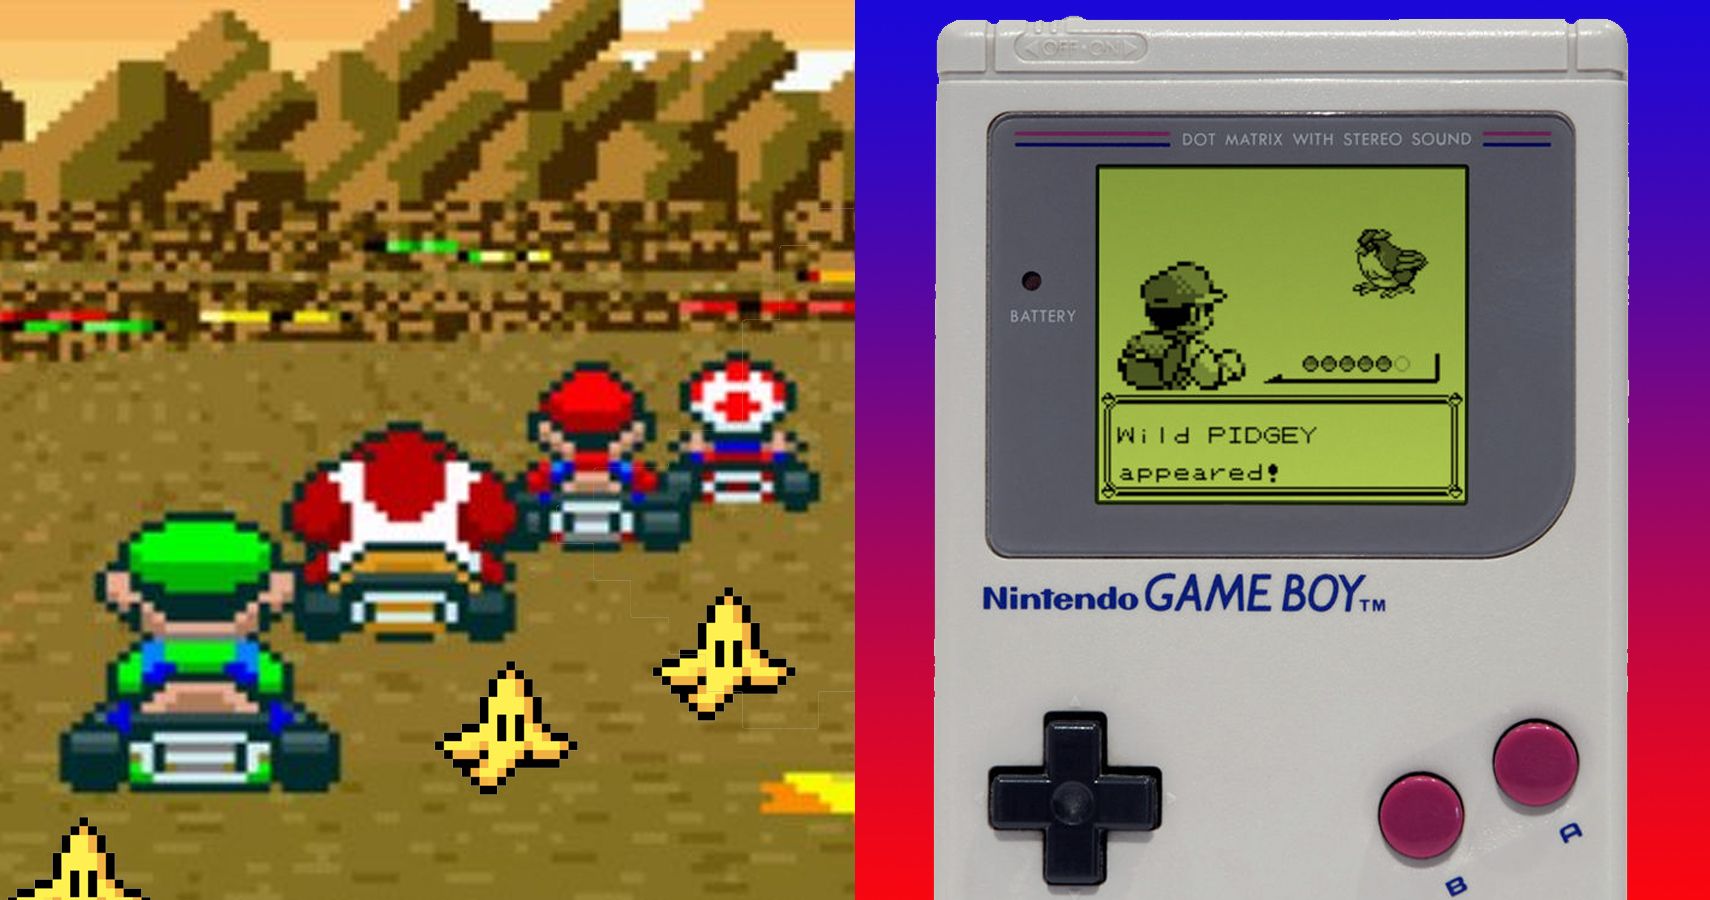 Pokemon Red/Blue (Game Boy) Review - RETRO GAMER JUNCTION